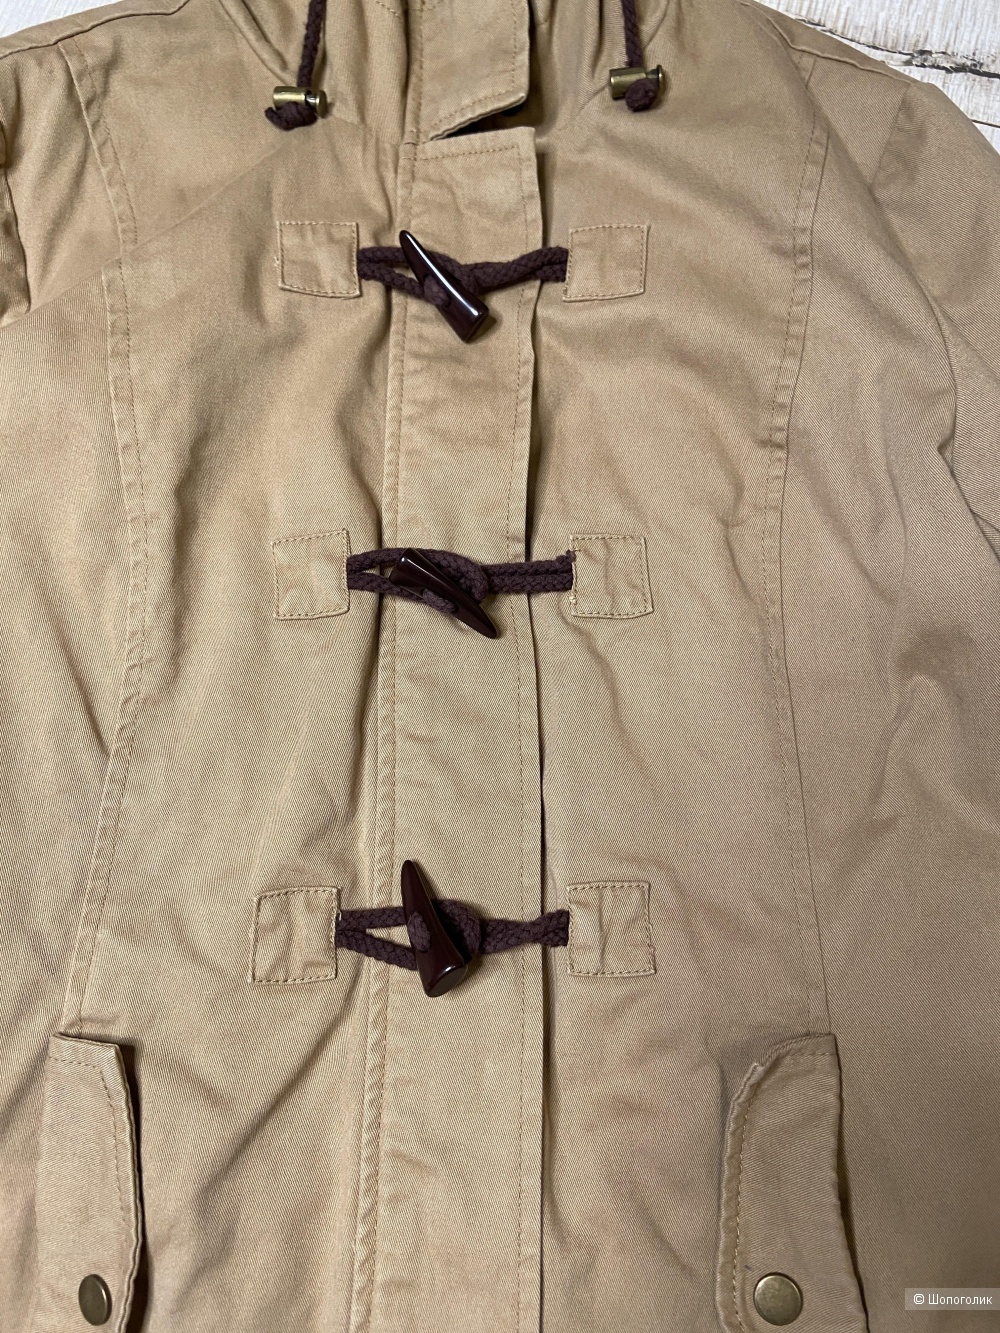 Куртка - дафлкот от бренда FLG, размер 42-44